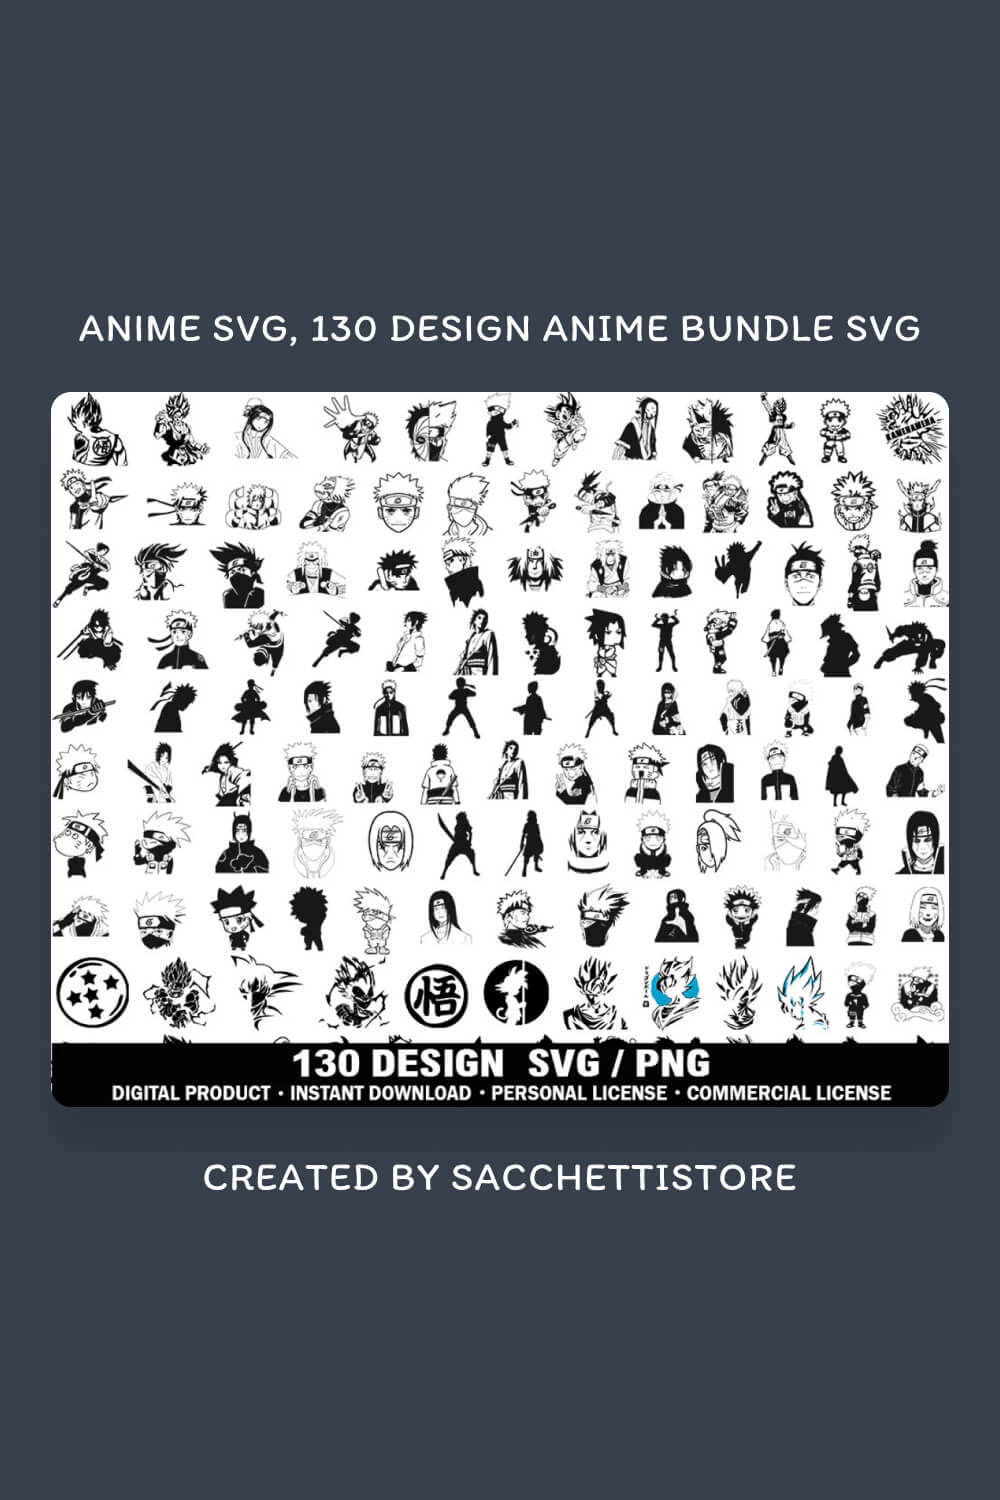 Anime SVG, 130 Design Anime Bundle SVG.